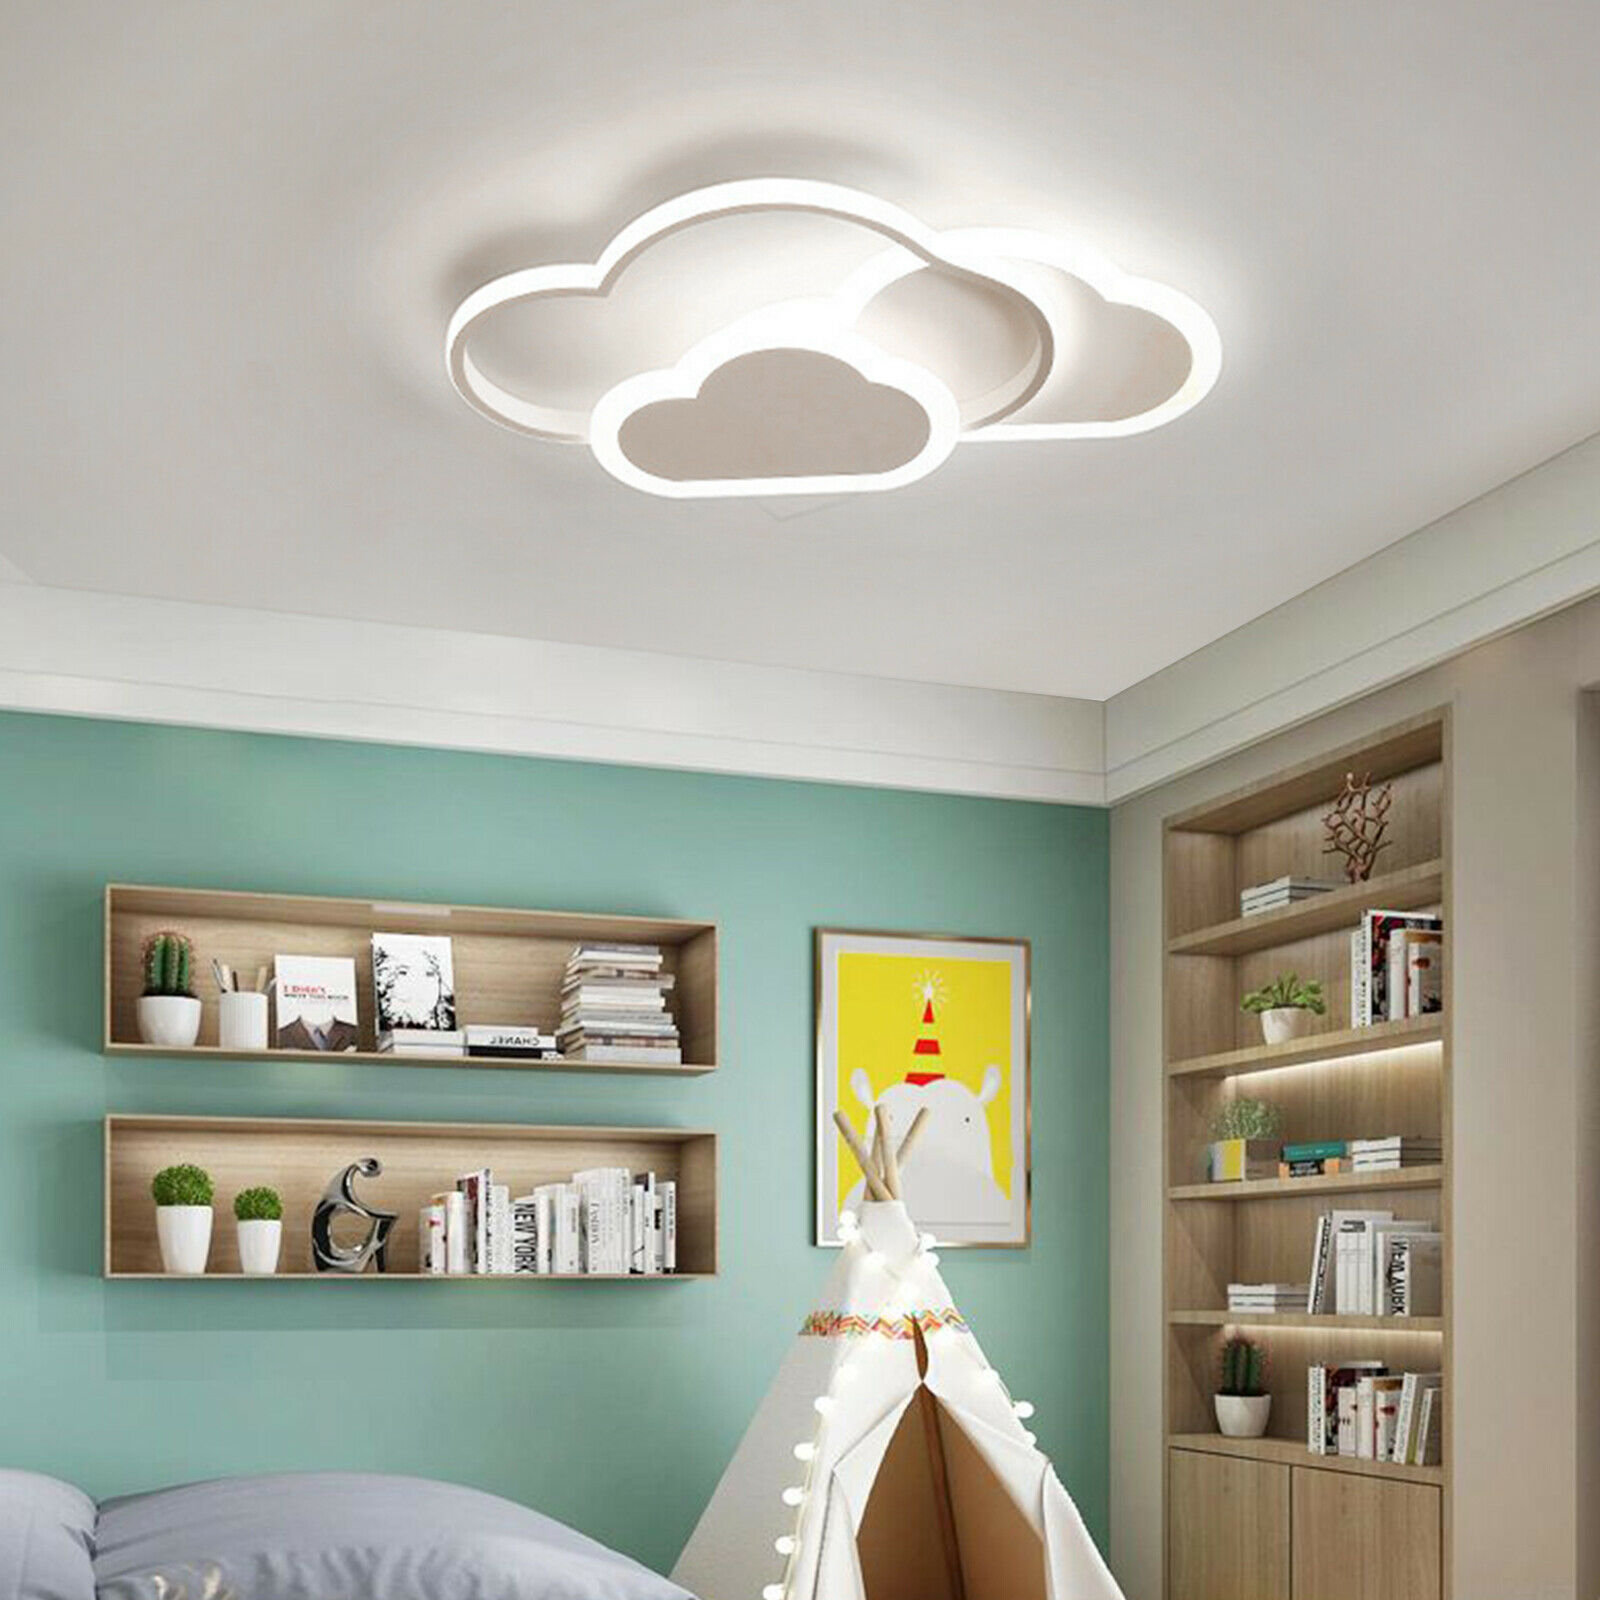 Light Luxury Chandelier Living Room Lamp Headlight Modern Minimalist  Ceiling Lam